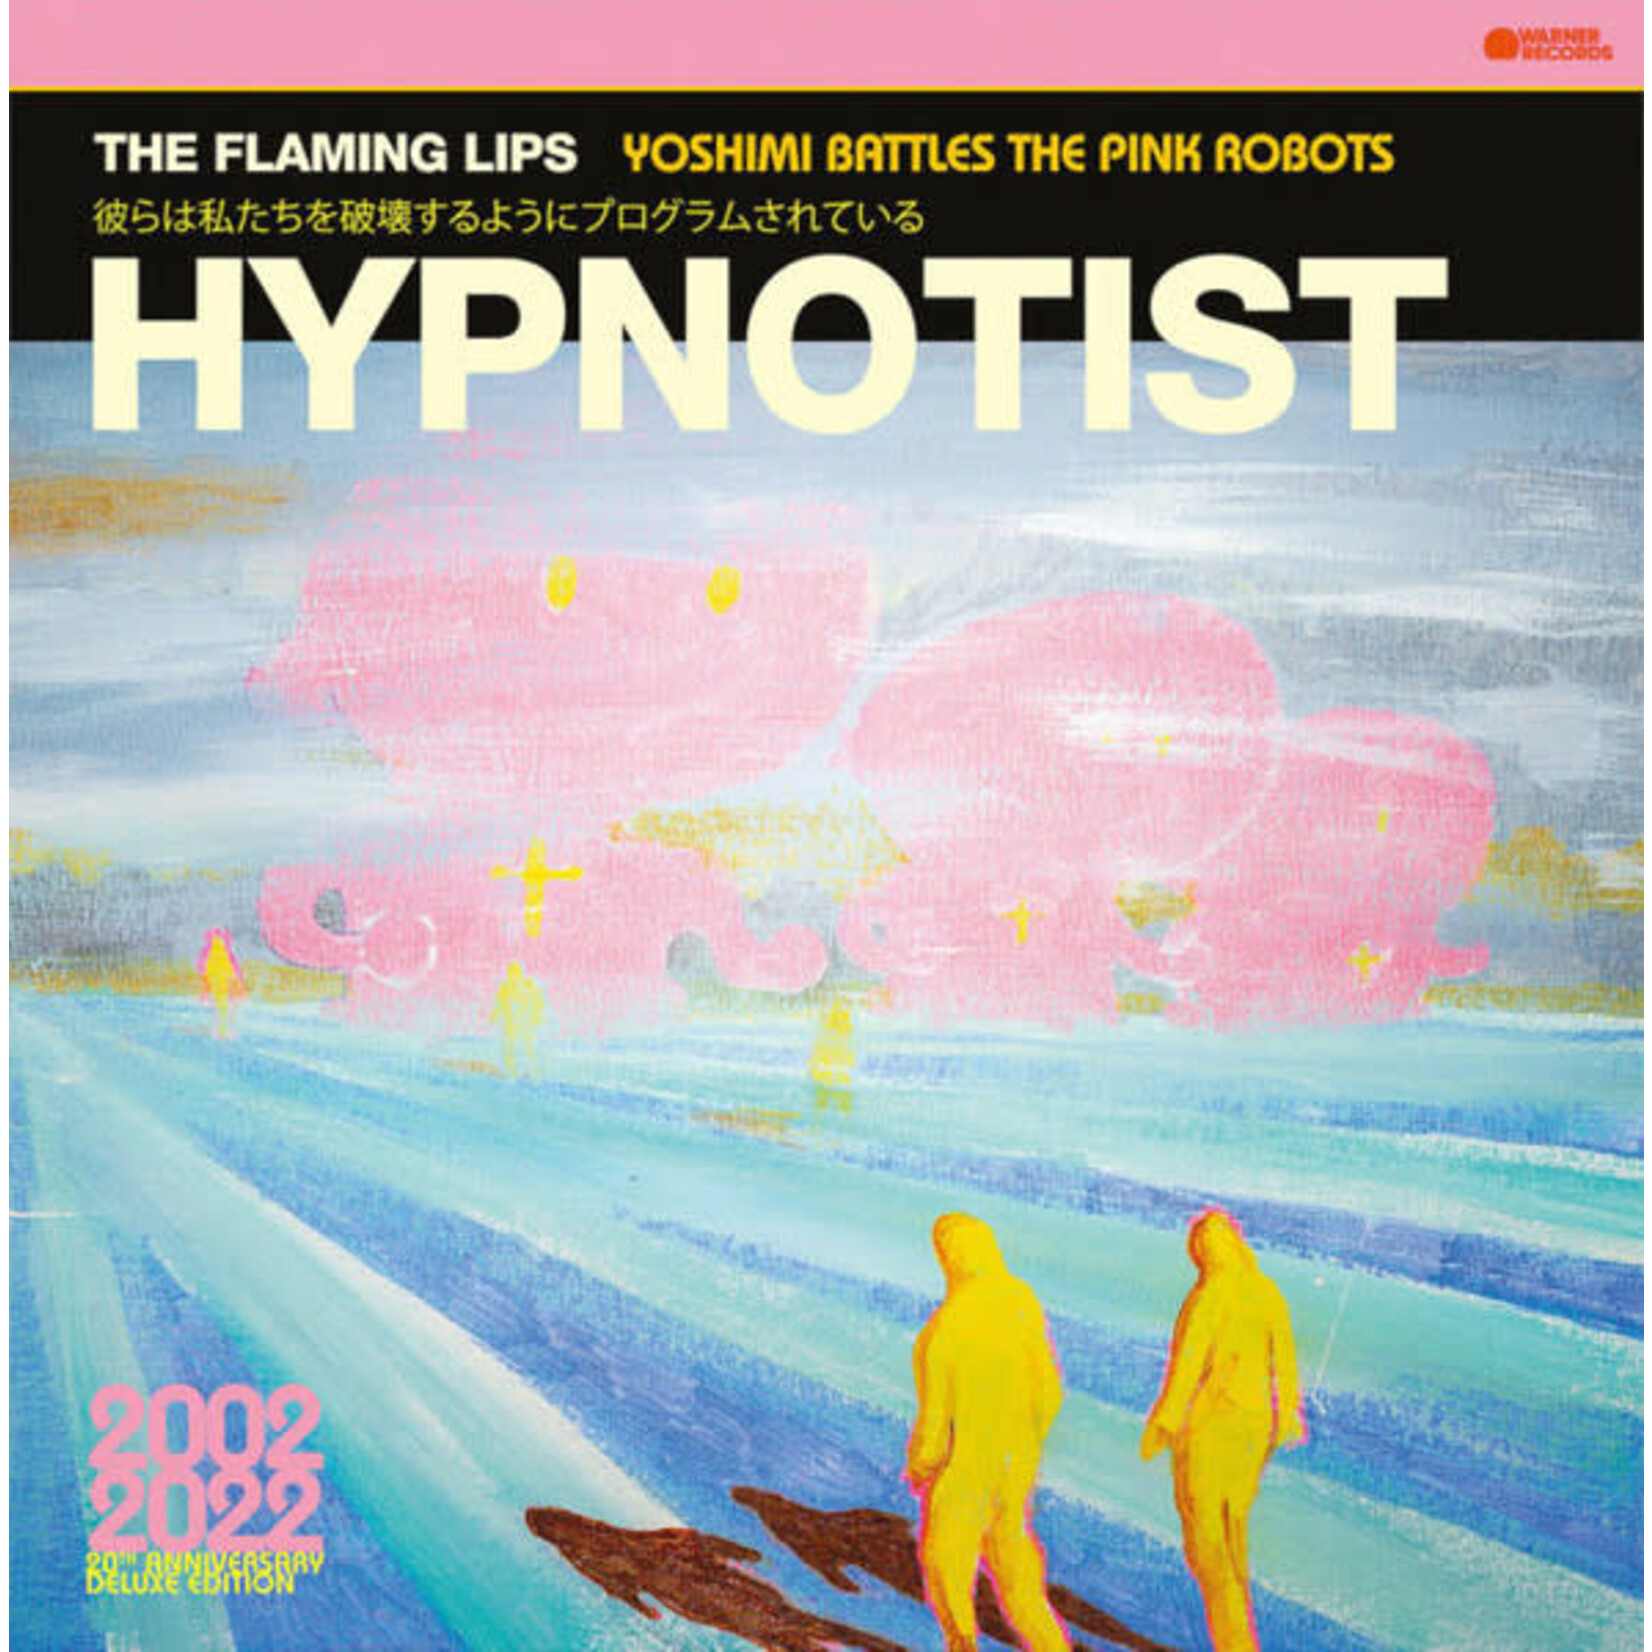 [New] Flaming Lips - Hypnotist (baby pink vinyl)